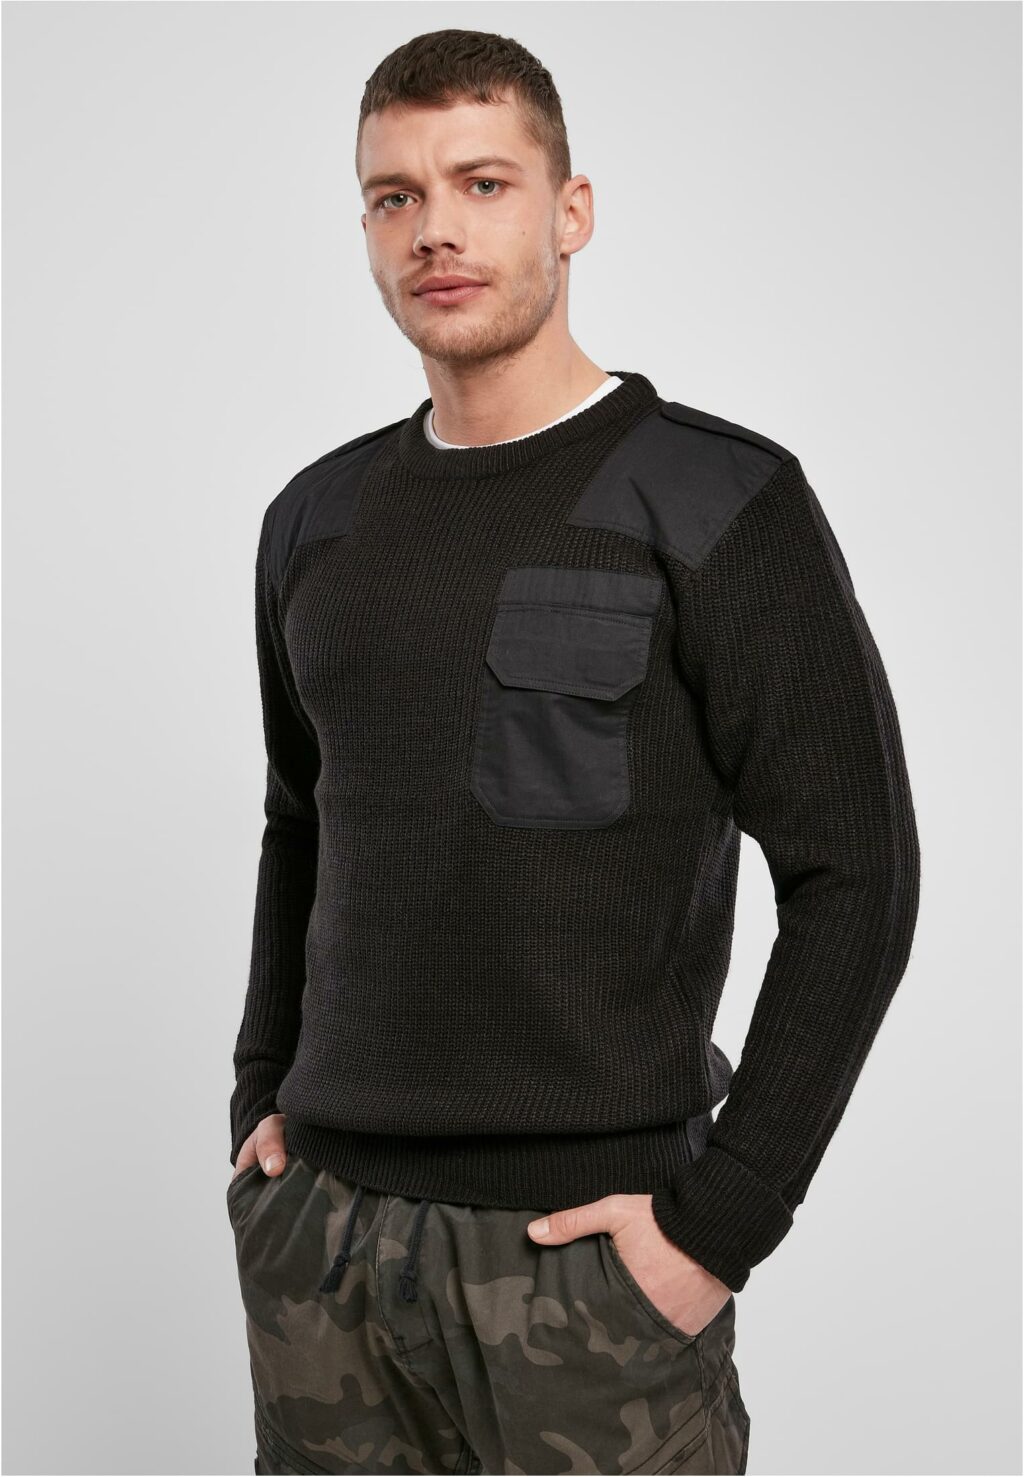 Brandit Military Sweater black BD5018